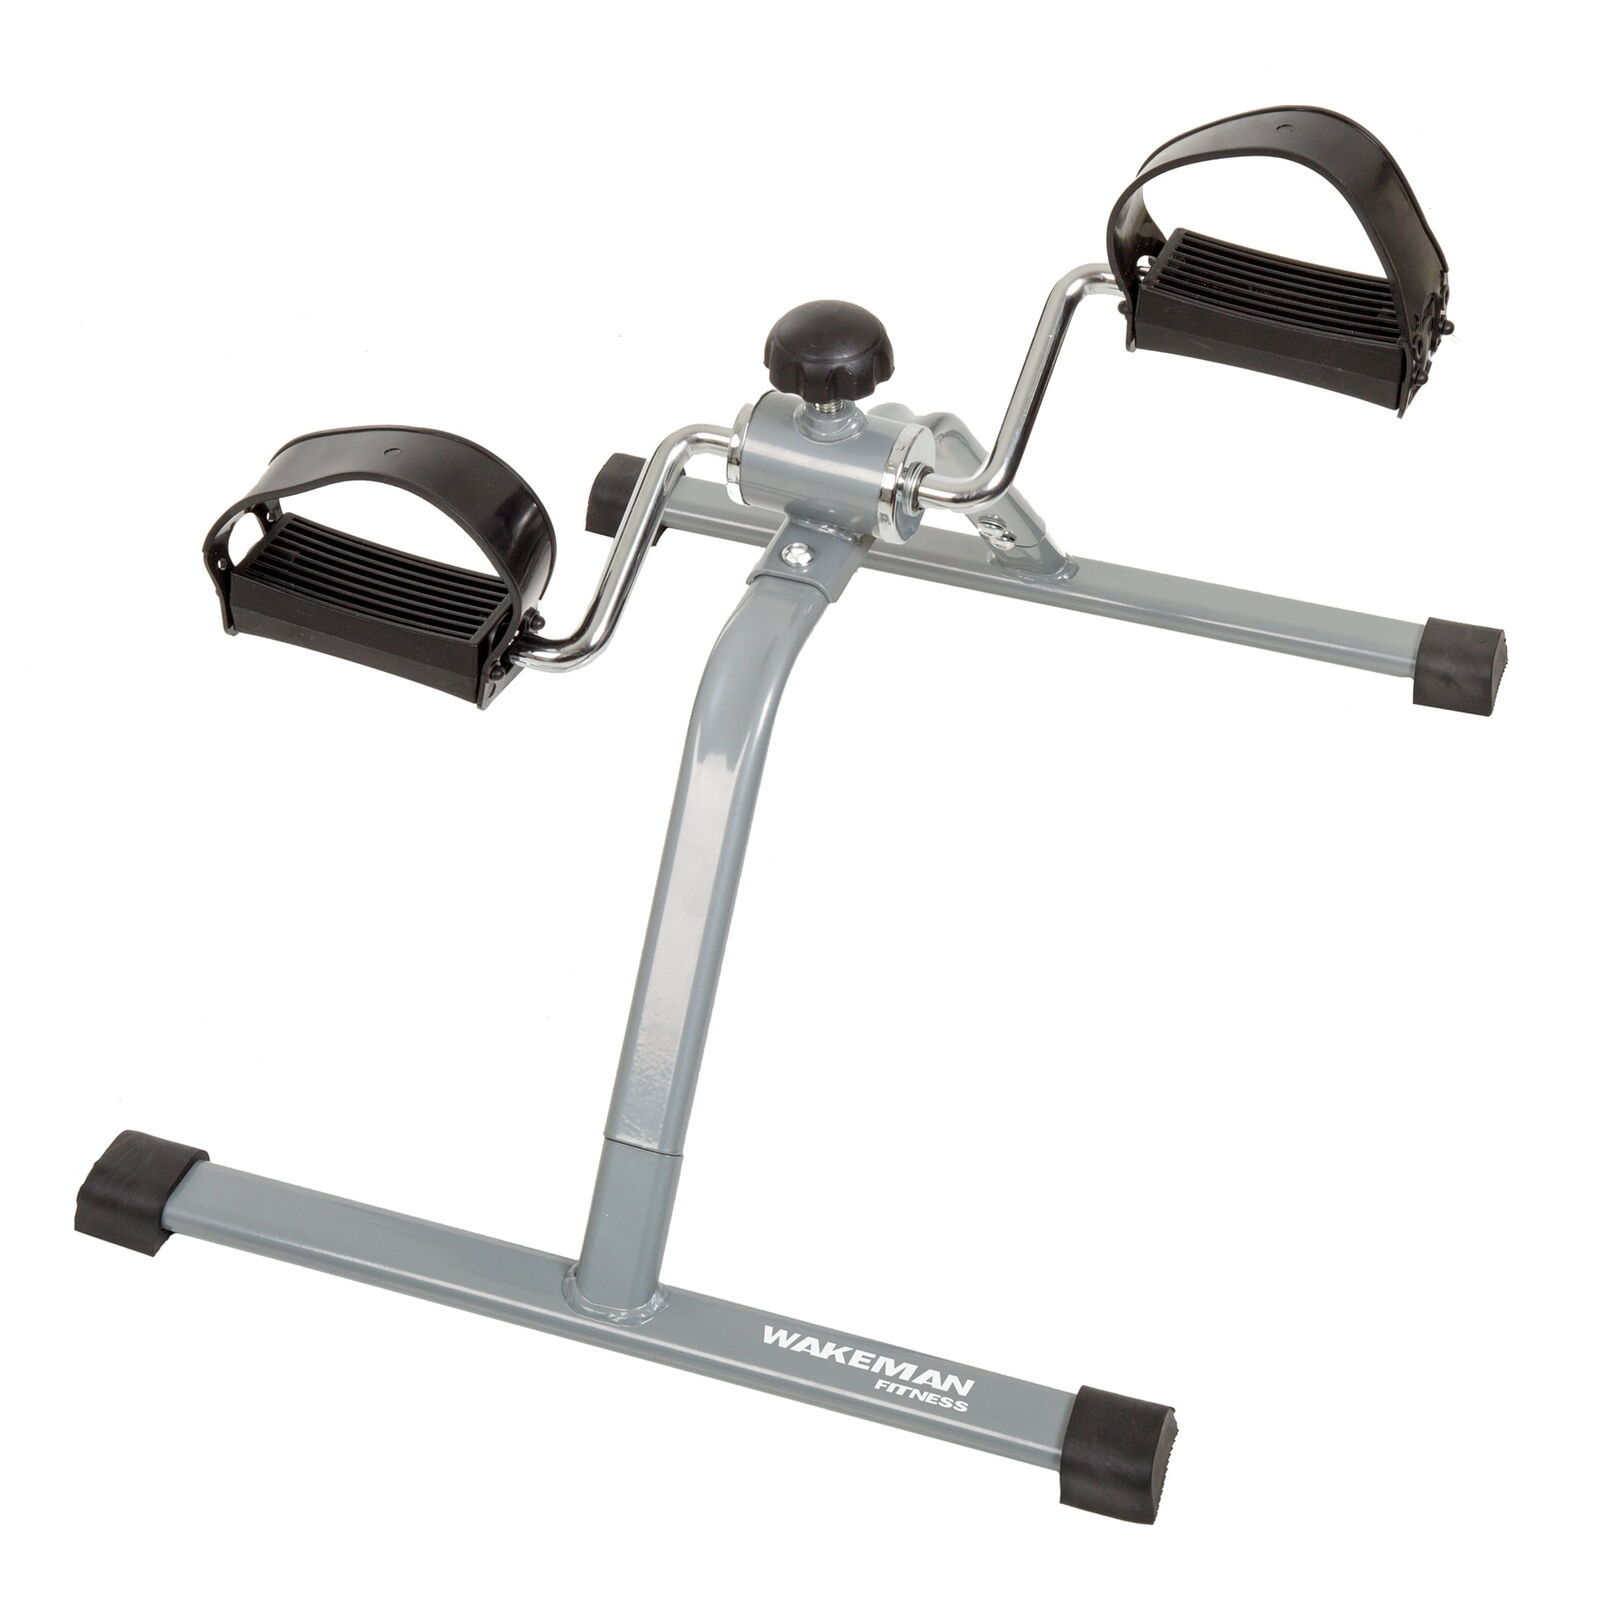 Portable Under Desk Stationary Fitness MachineIndoor Exercise Pedal Machine Bike